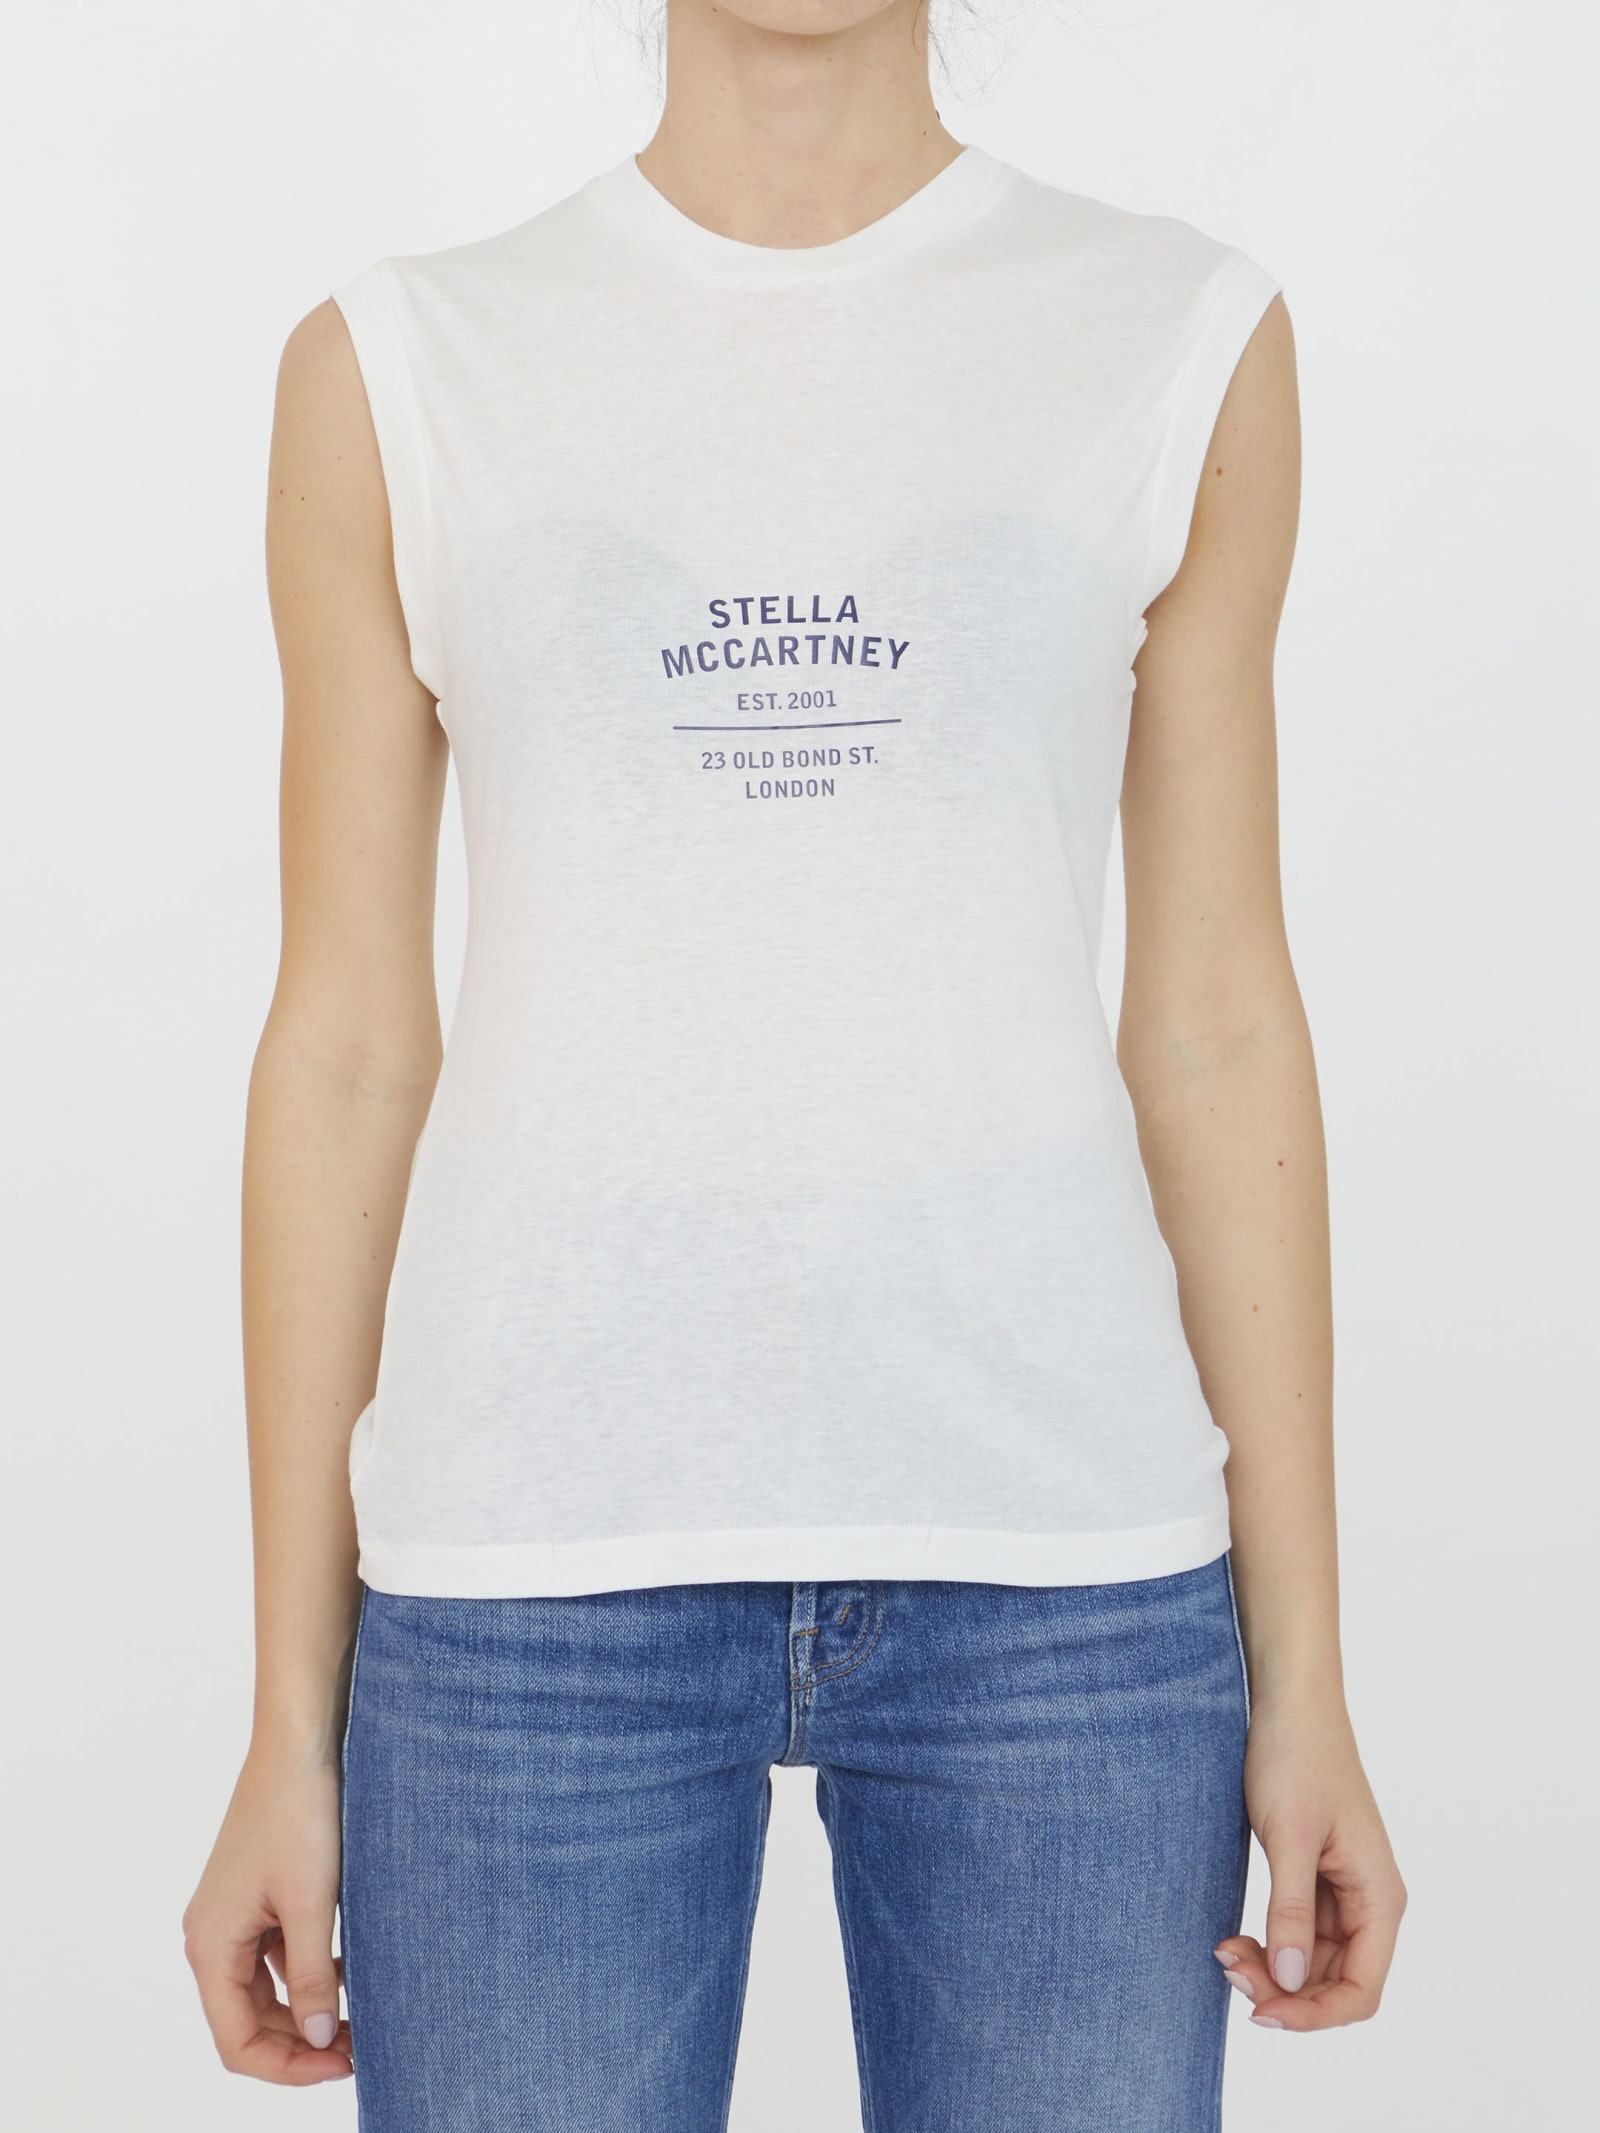 Stella McCartney smc 23 Old Bond Street T-shirt